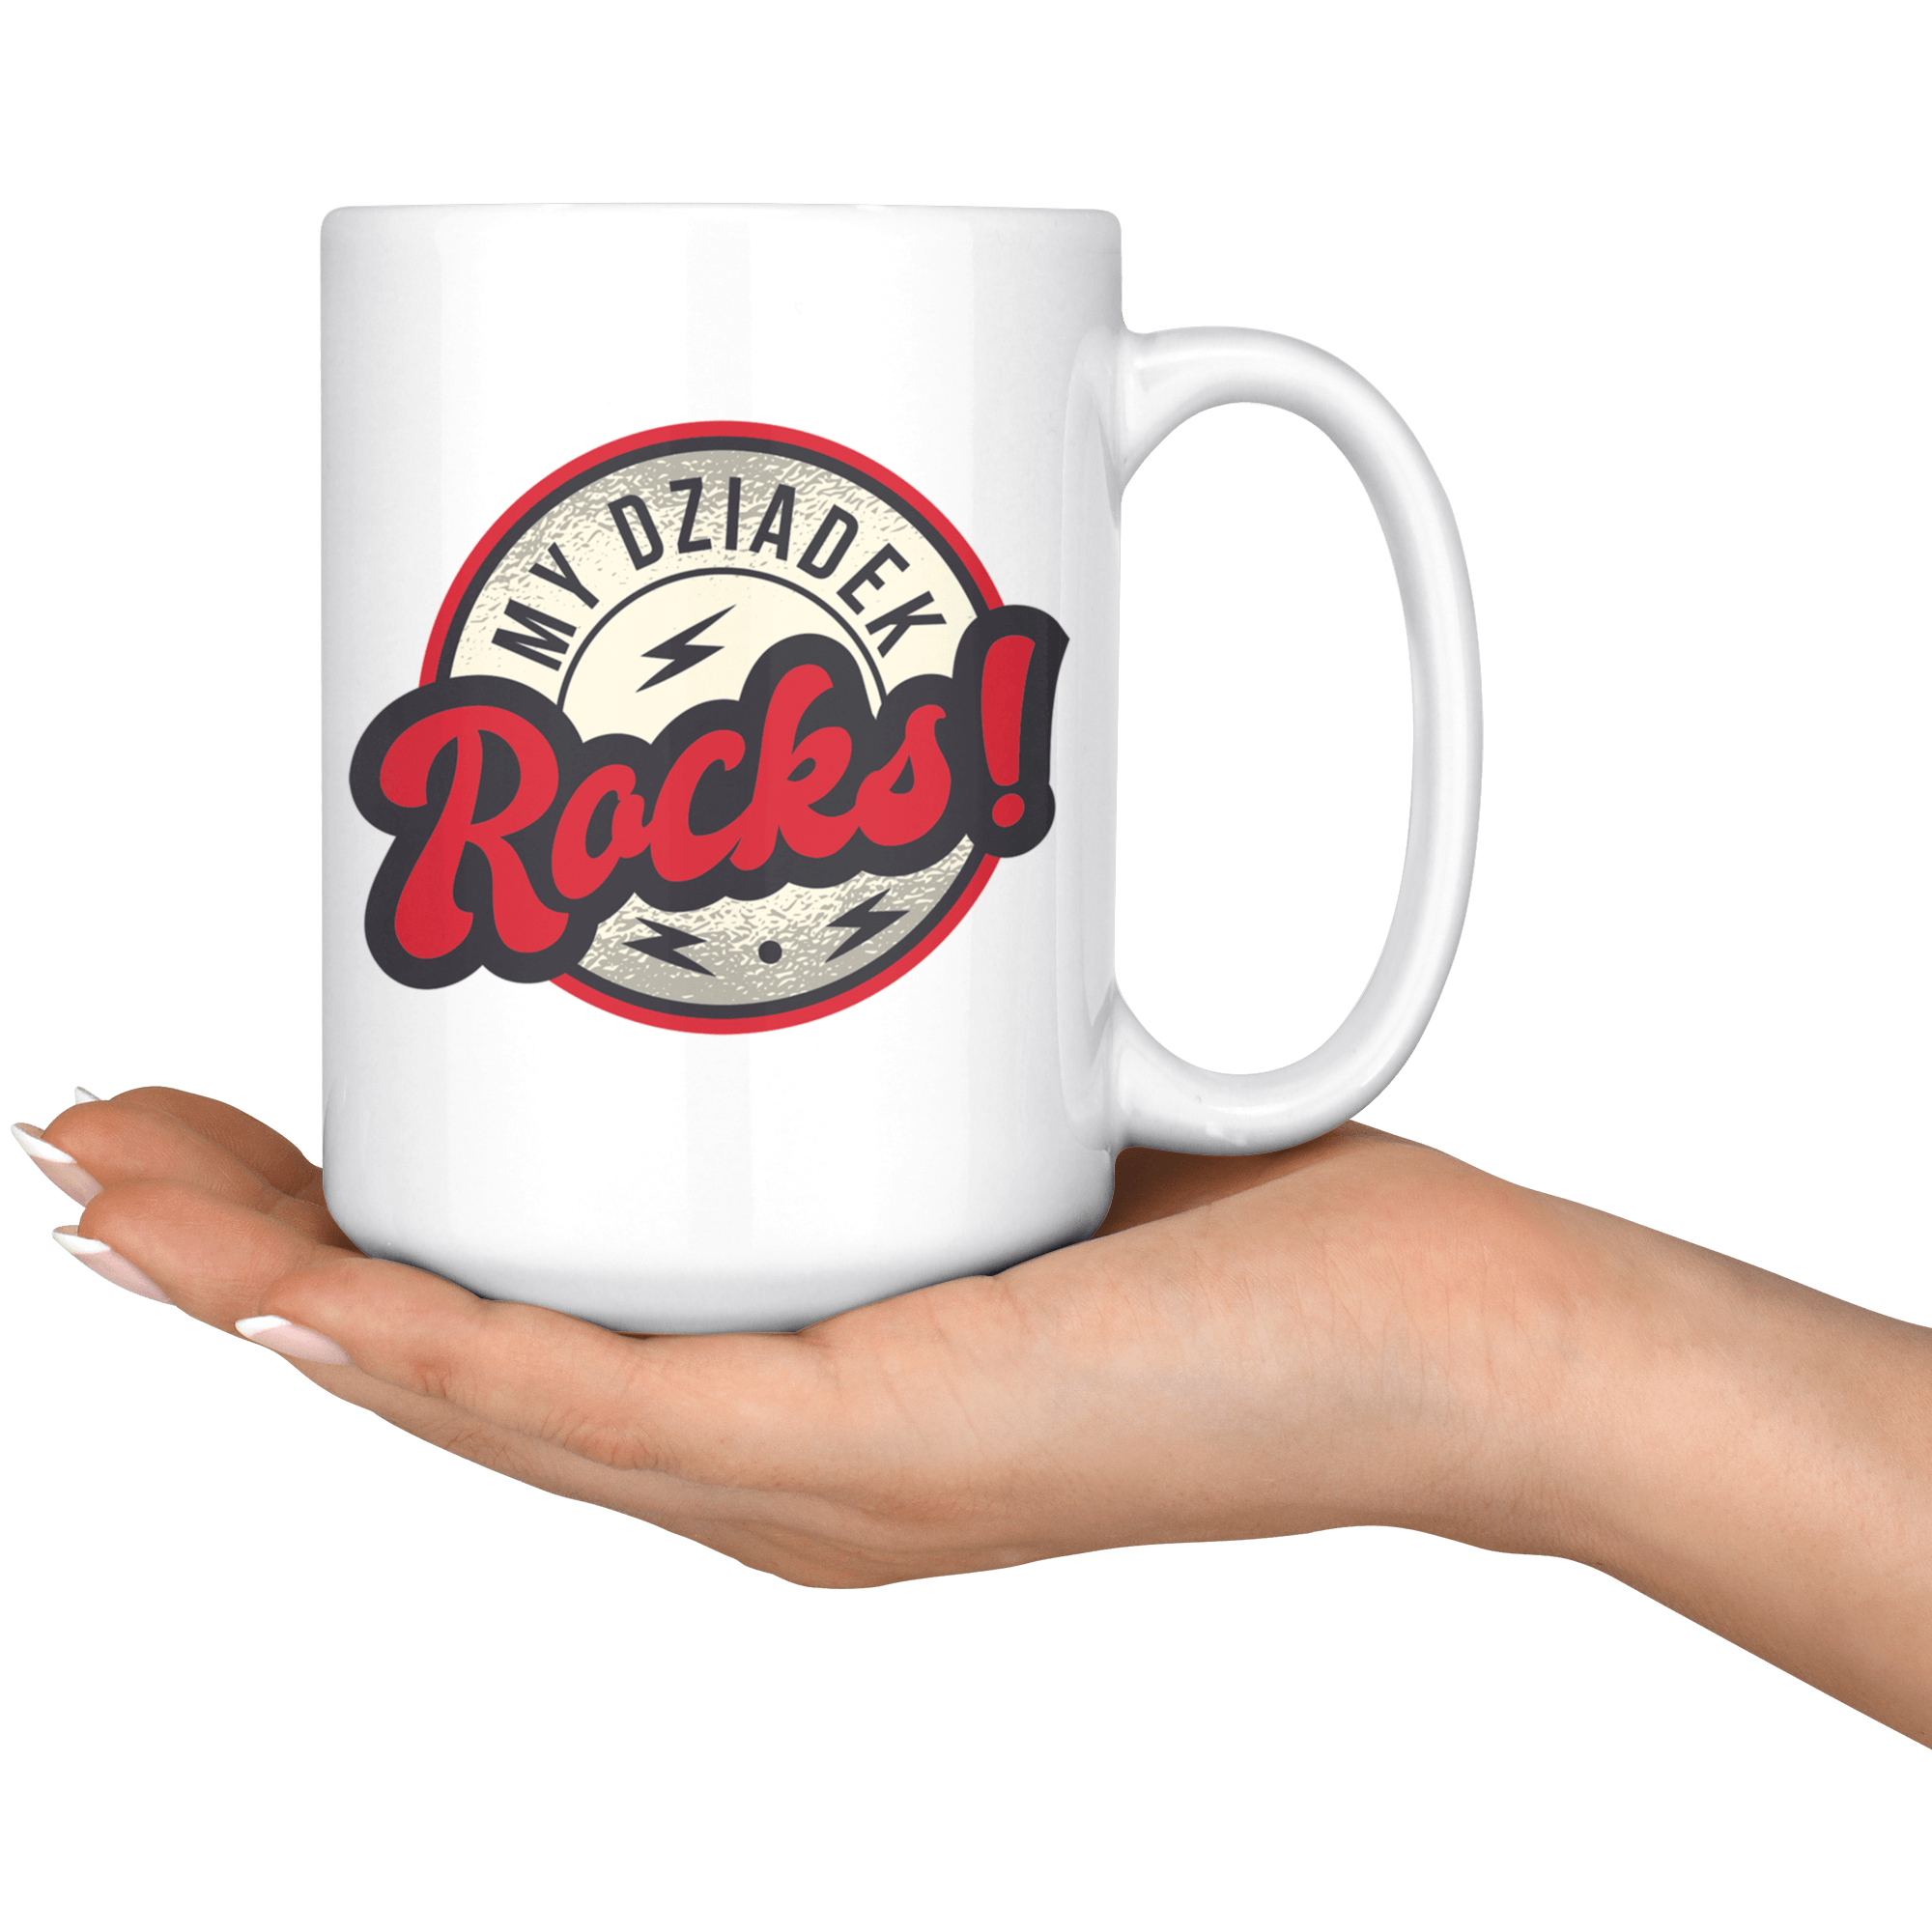 My Dziadek Rocks Coffee Mug Drinkware teelaunch   